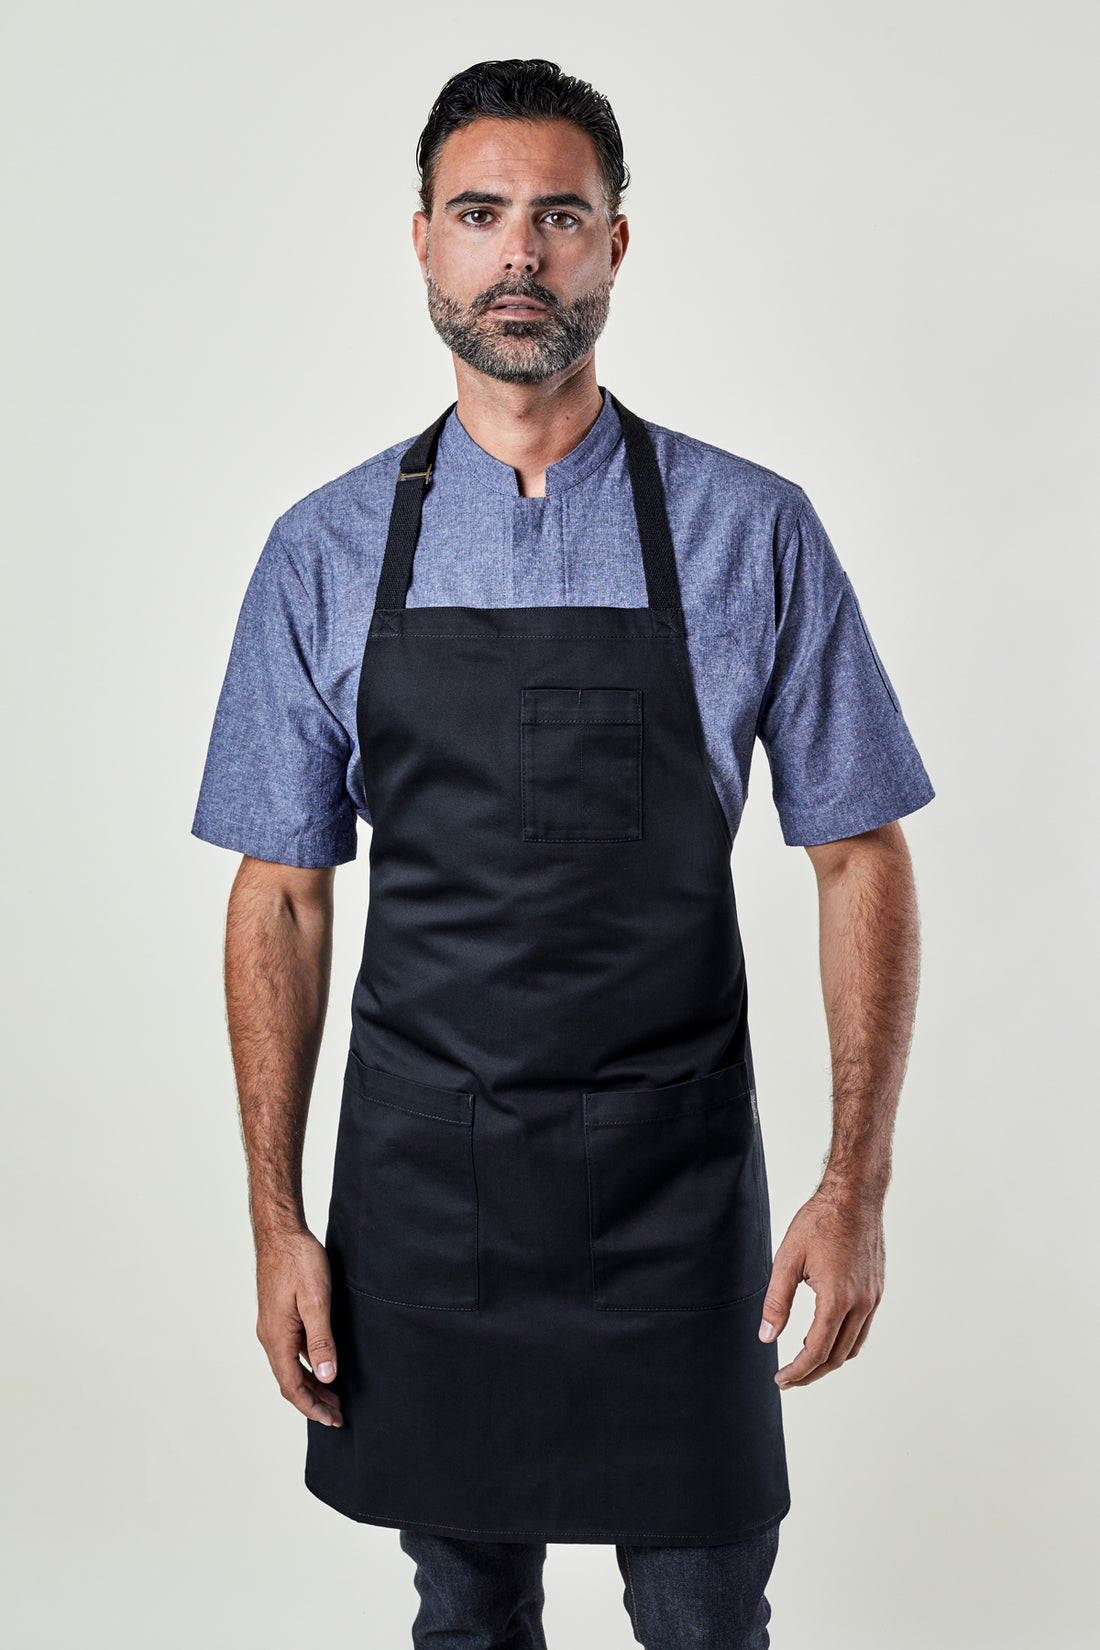 Buy Custom Chef Uniform – Essential Collection – BlueCut Aprons